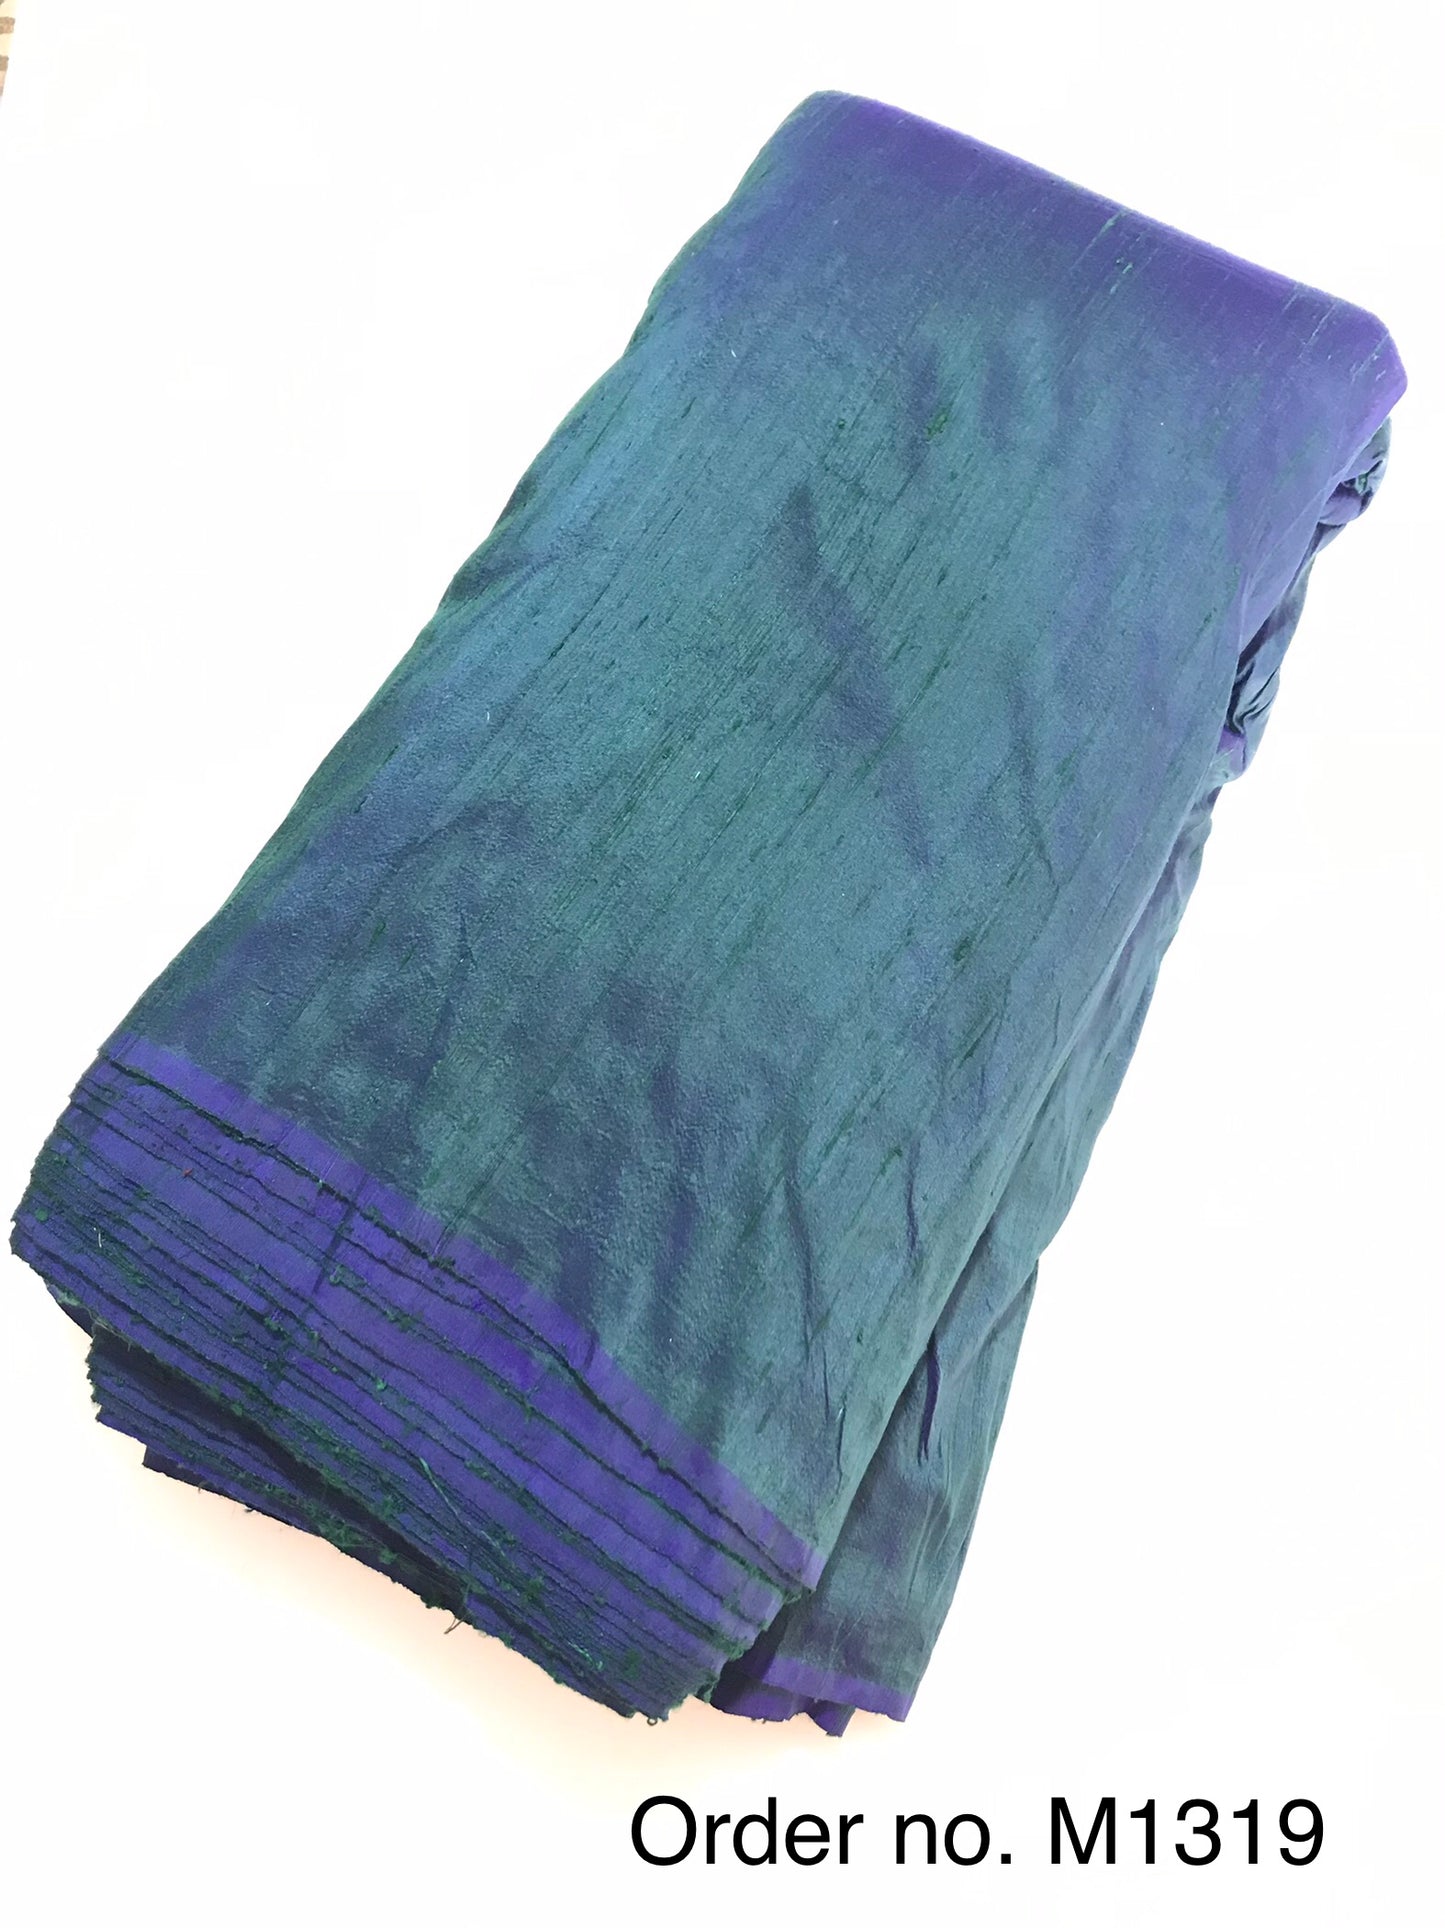 Raw silk 100gm width 44”    Smsc 021